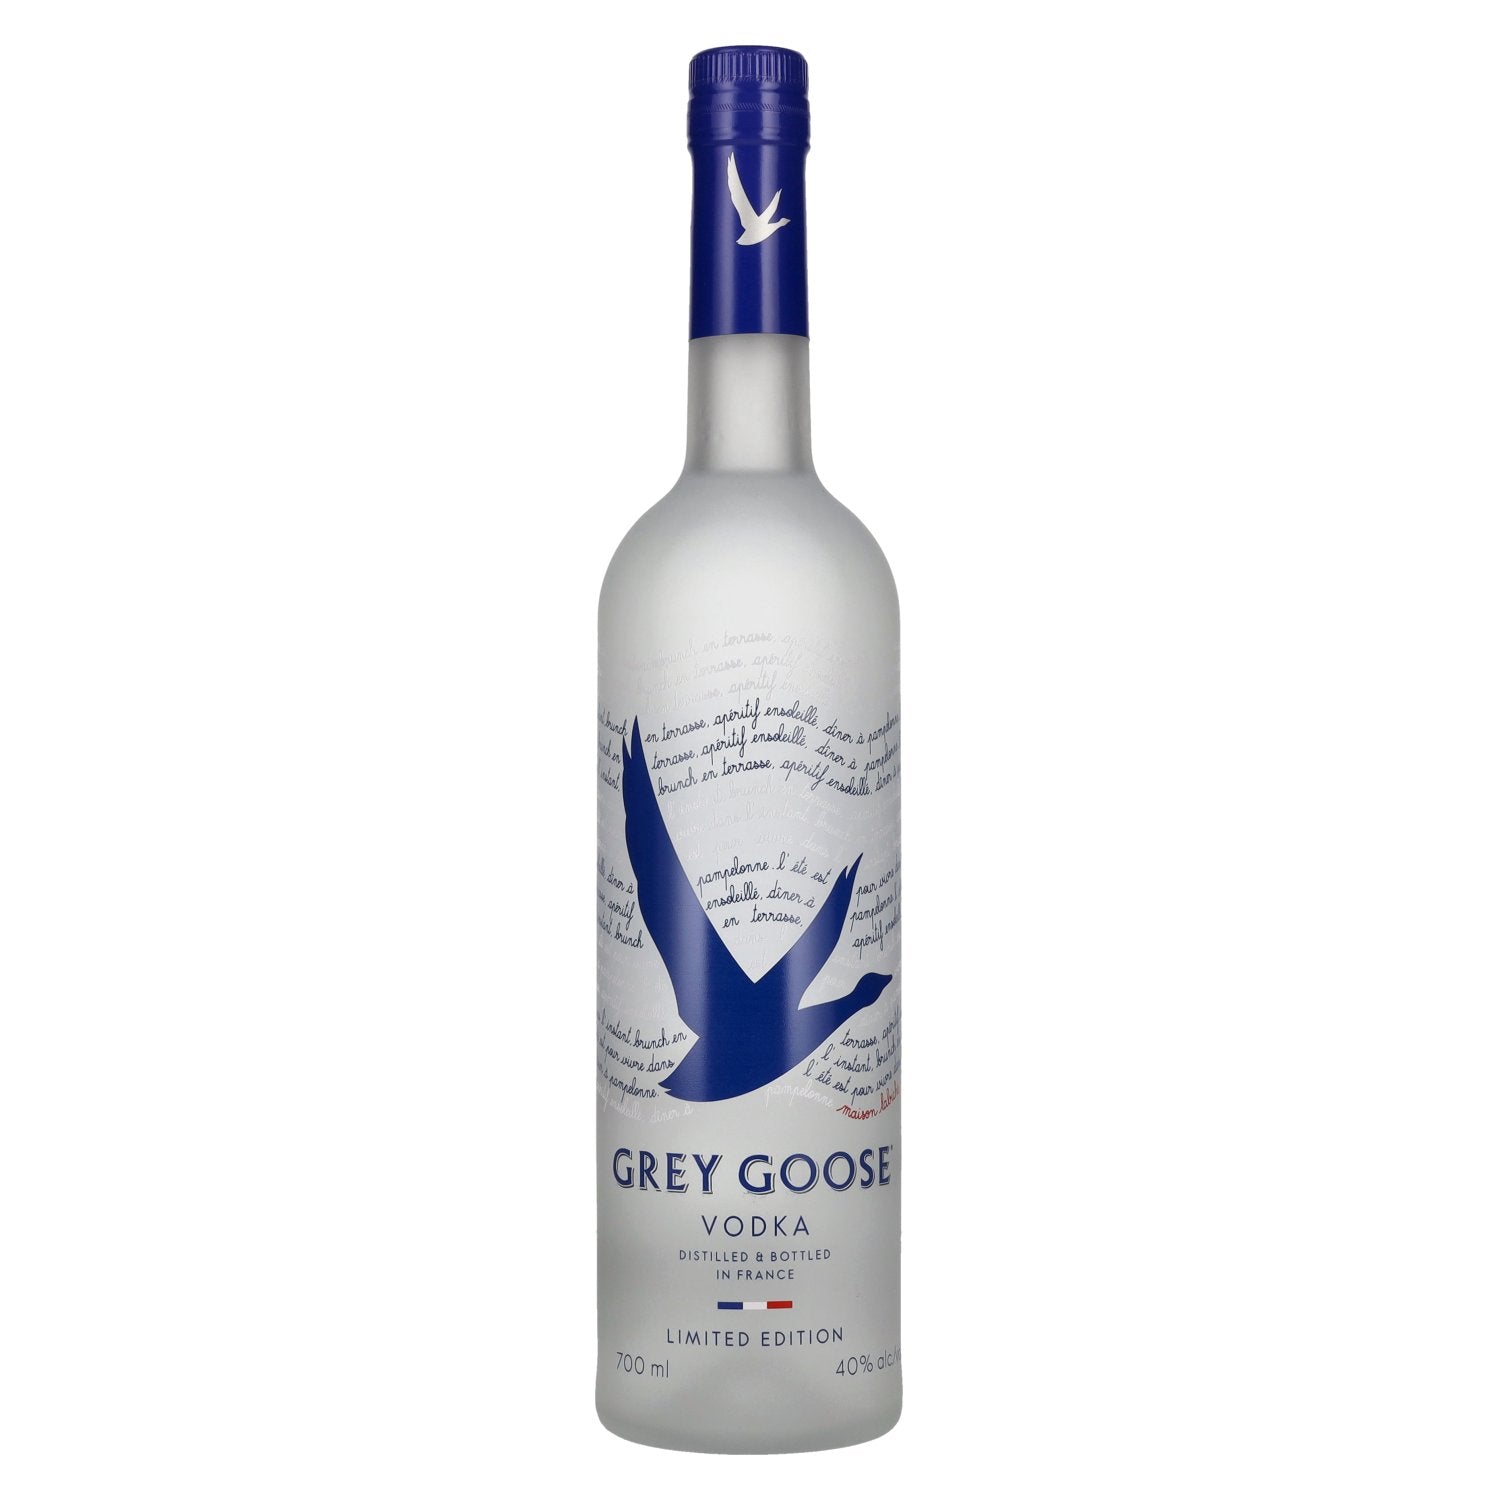 Grey Goose Vodka Prices: Budgeting Your Spirits